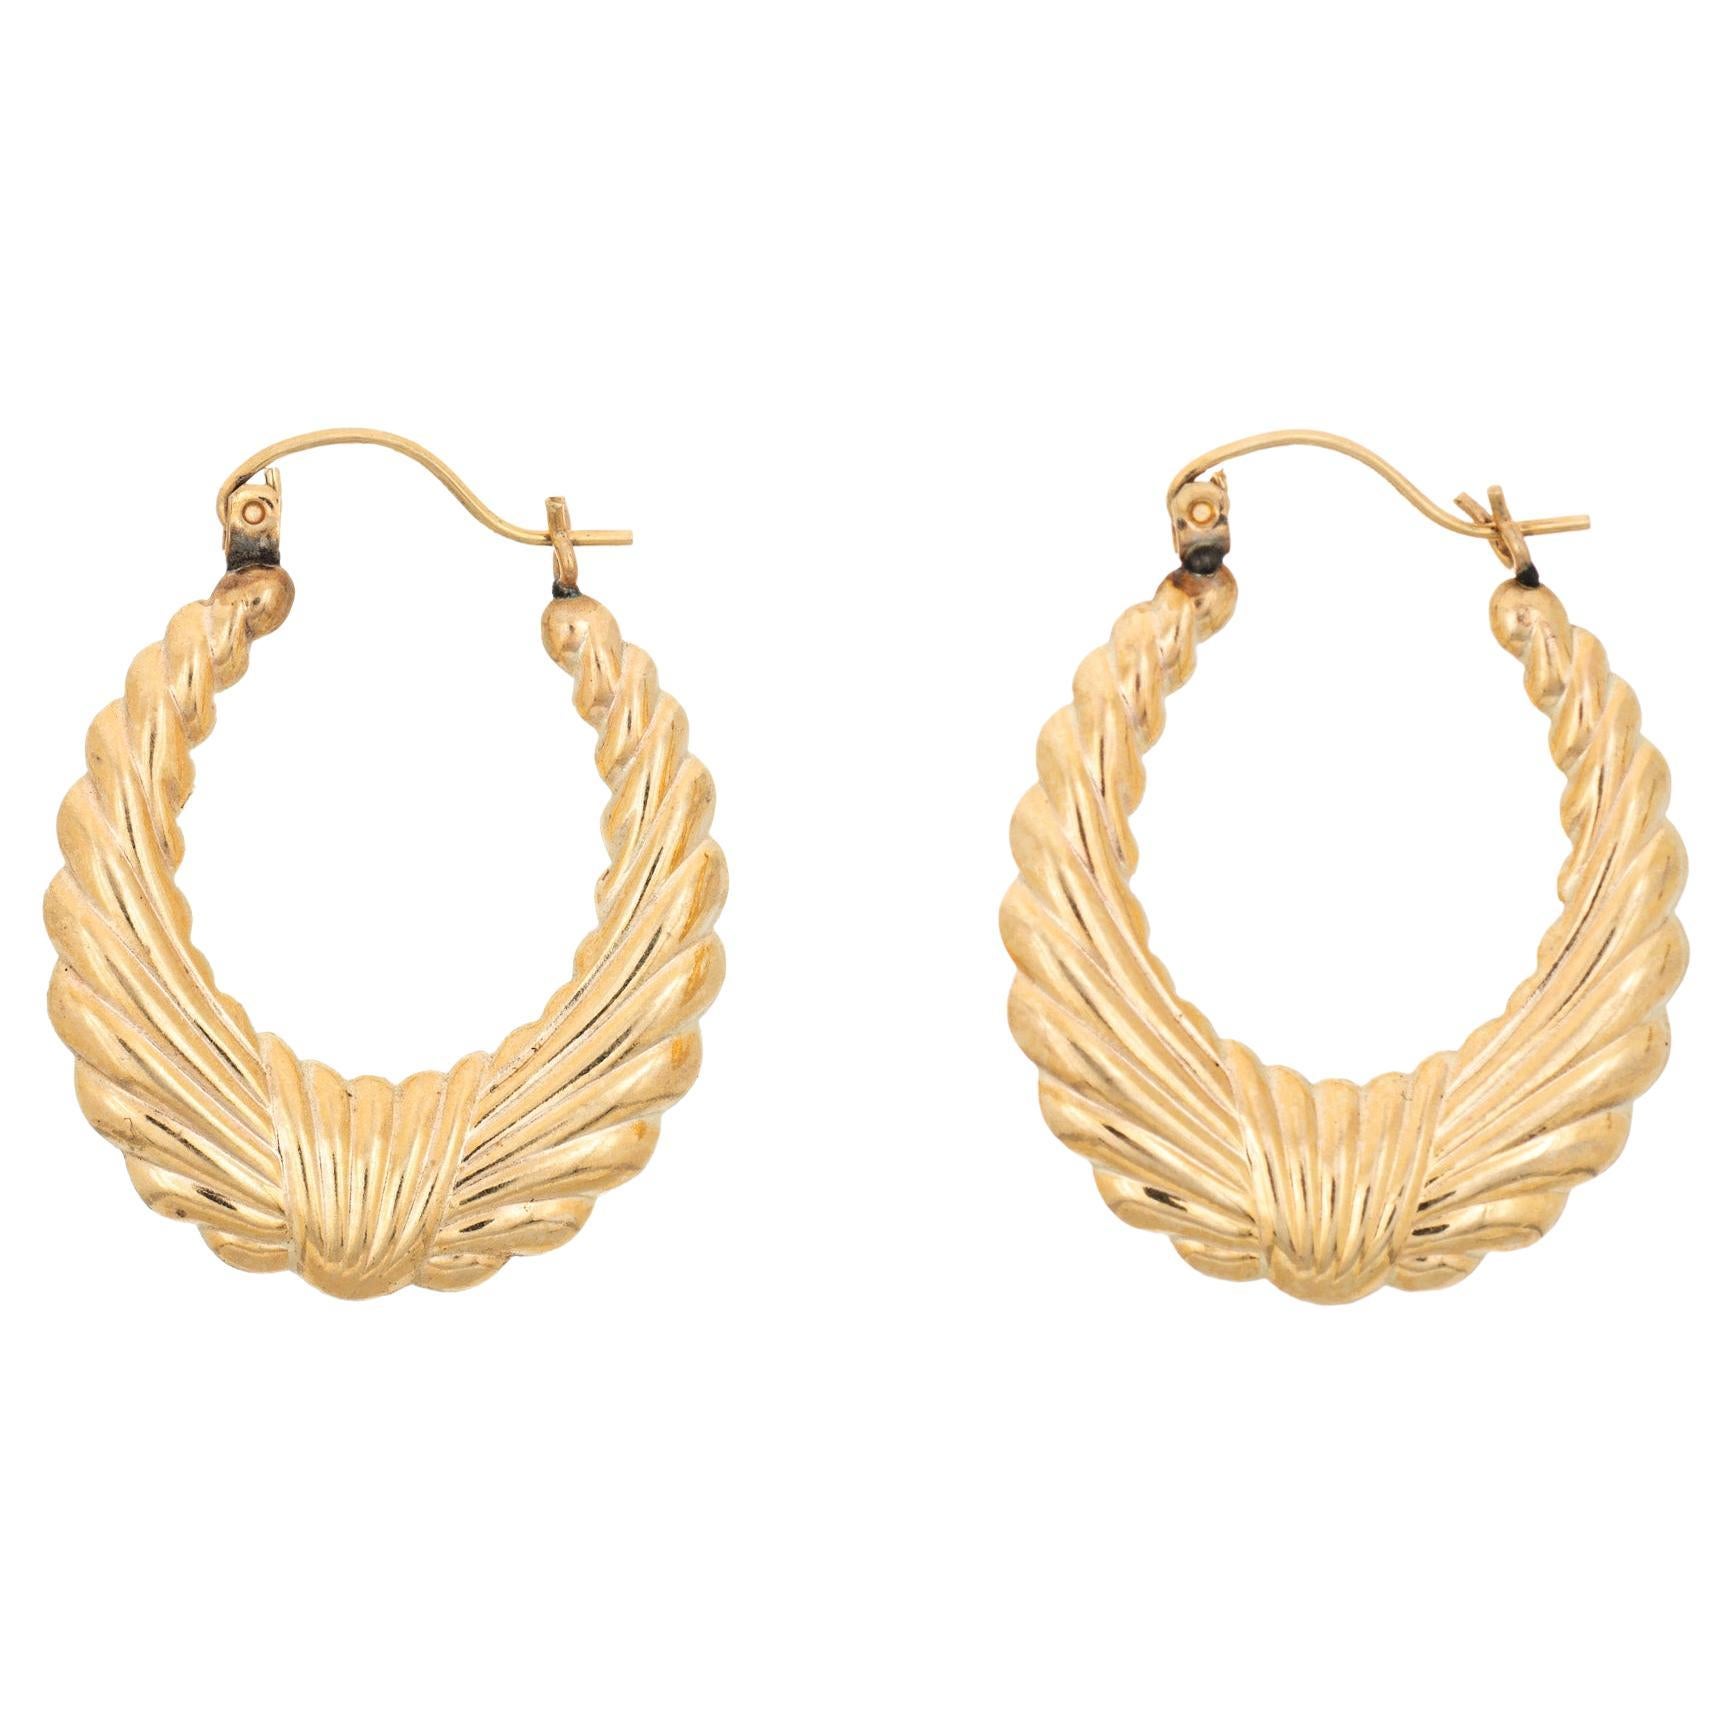 Oval Wreath Hoop Earrings Vintage 14k Yellow Gold 1" Drops Estate Jewelry For Sale